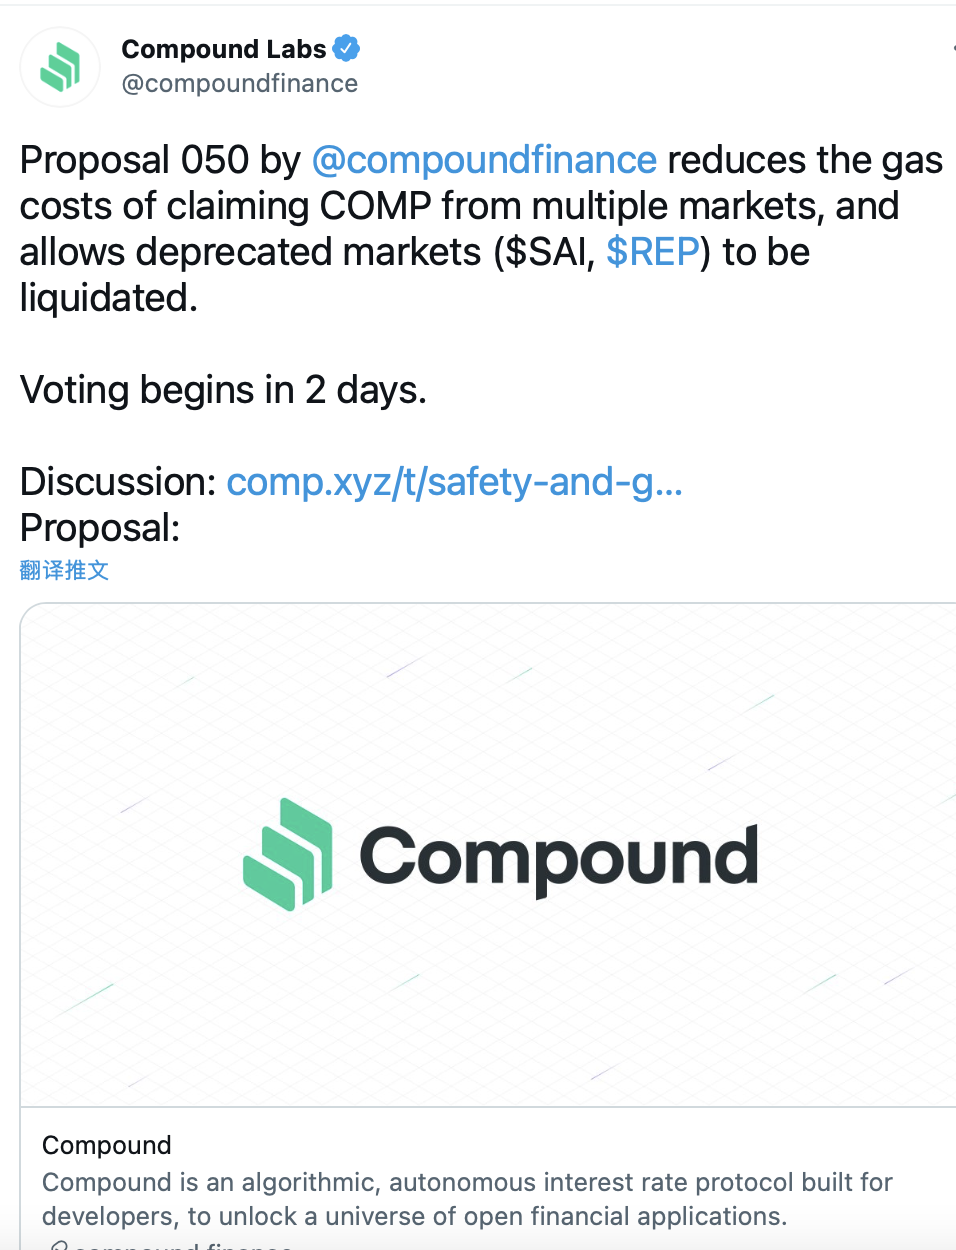 Compound社区发起提案建议降低从多个市场申领COMP的gas成本